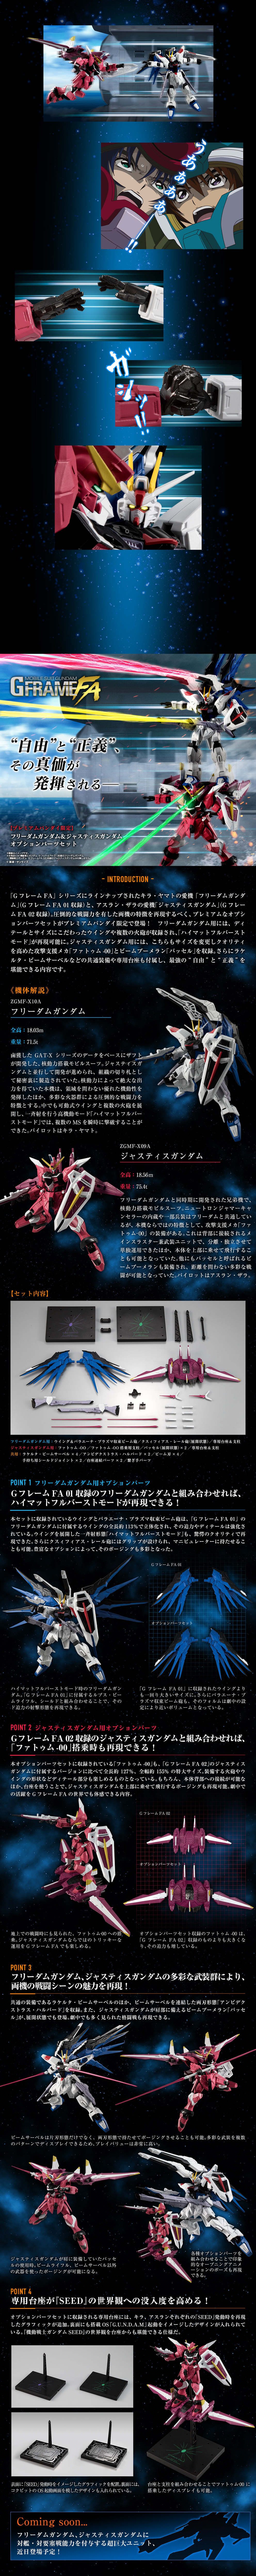 Mobile Suit Gundam G Frame Full Armor Option Parts set for ZGMF-X10A Freedom Gundam + ZGMF-X09A Justice Gundam